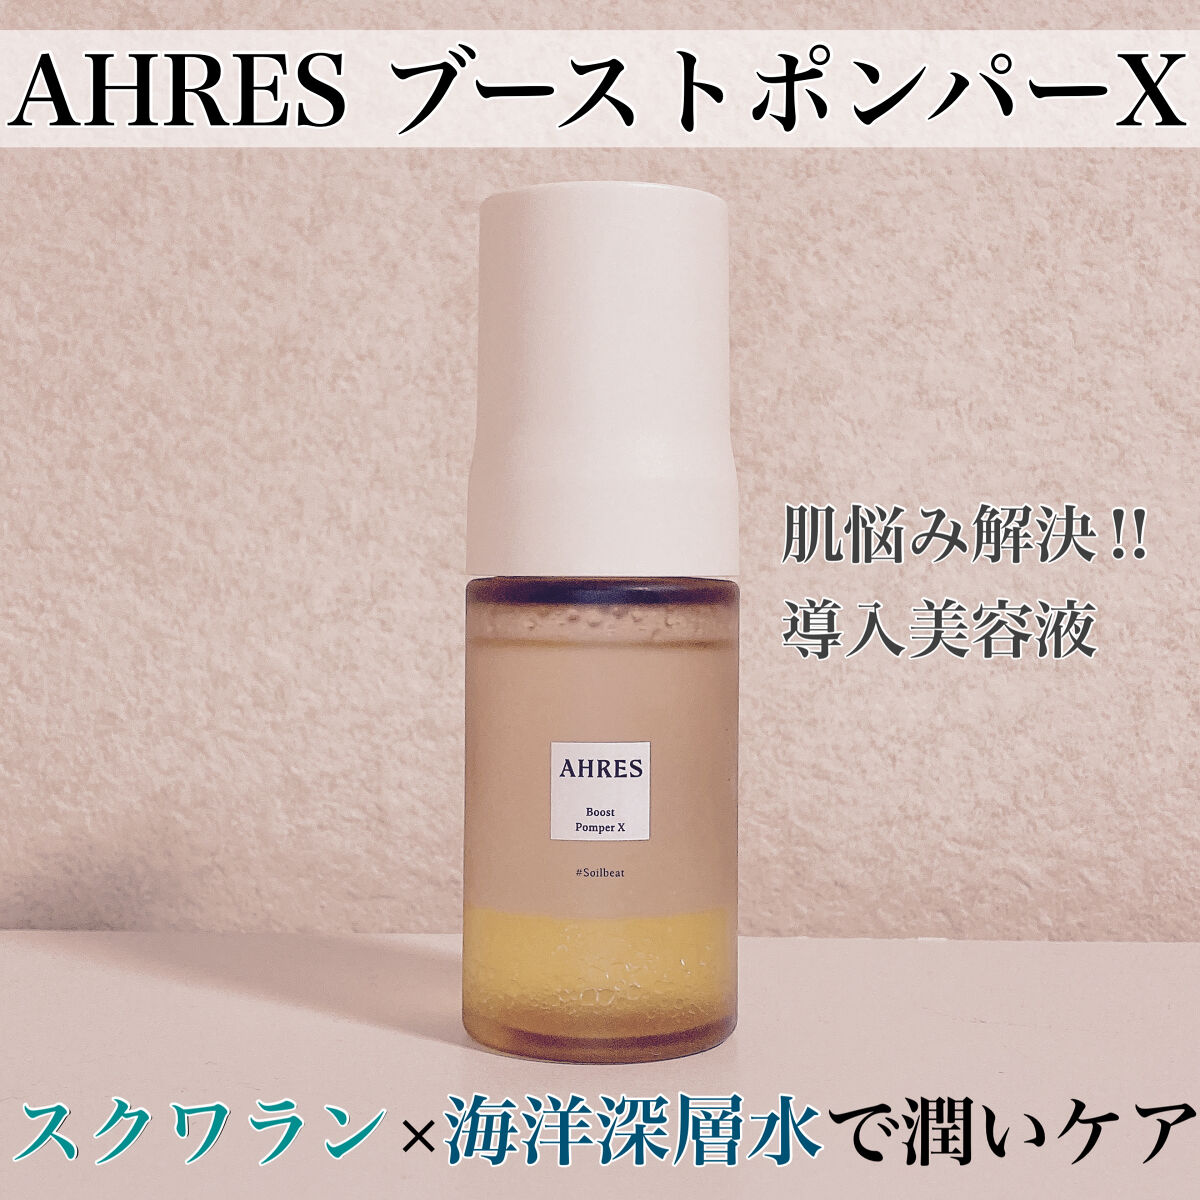 Ahres アーレス ブーストポンパーX 美容液オイル - 基礎化粧品